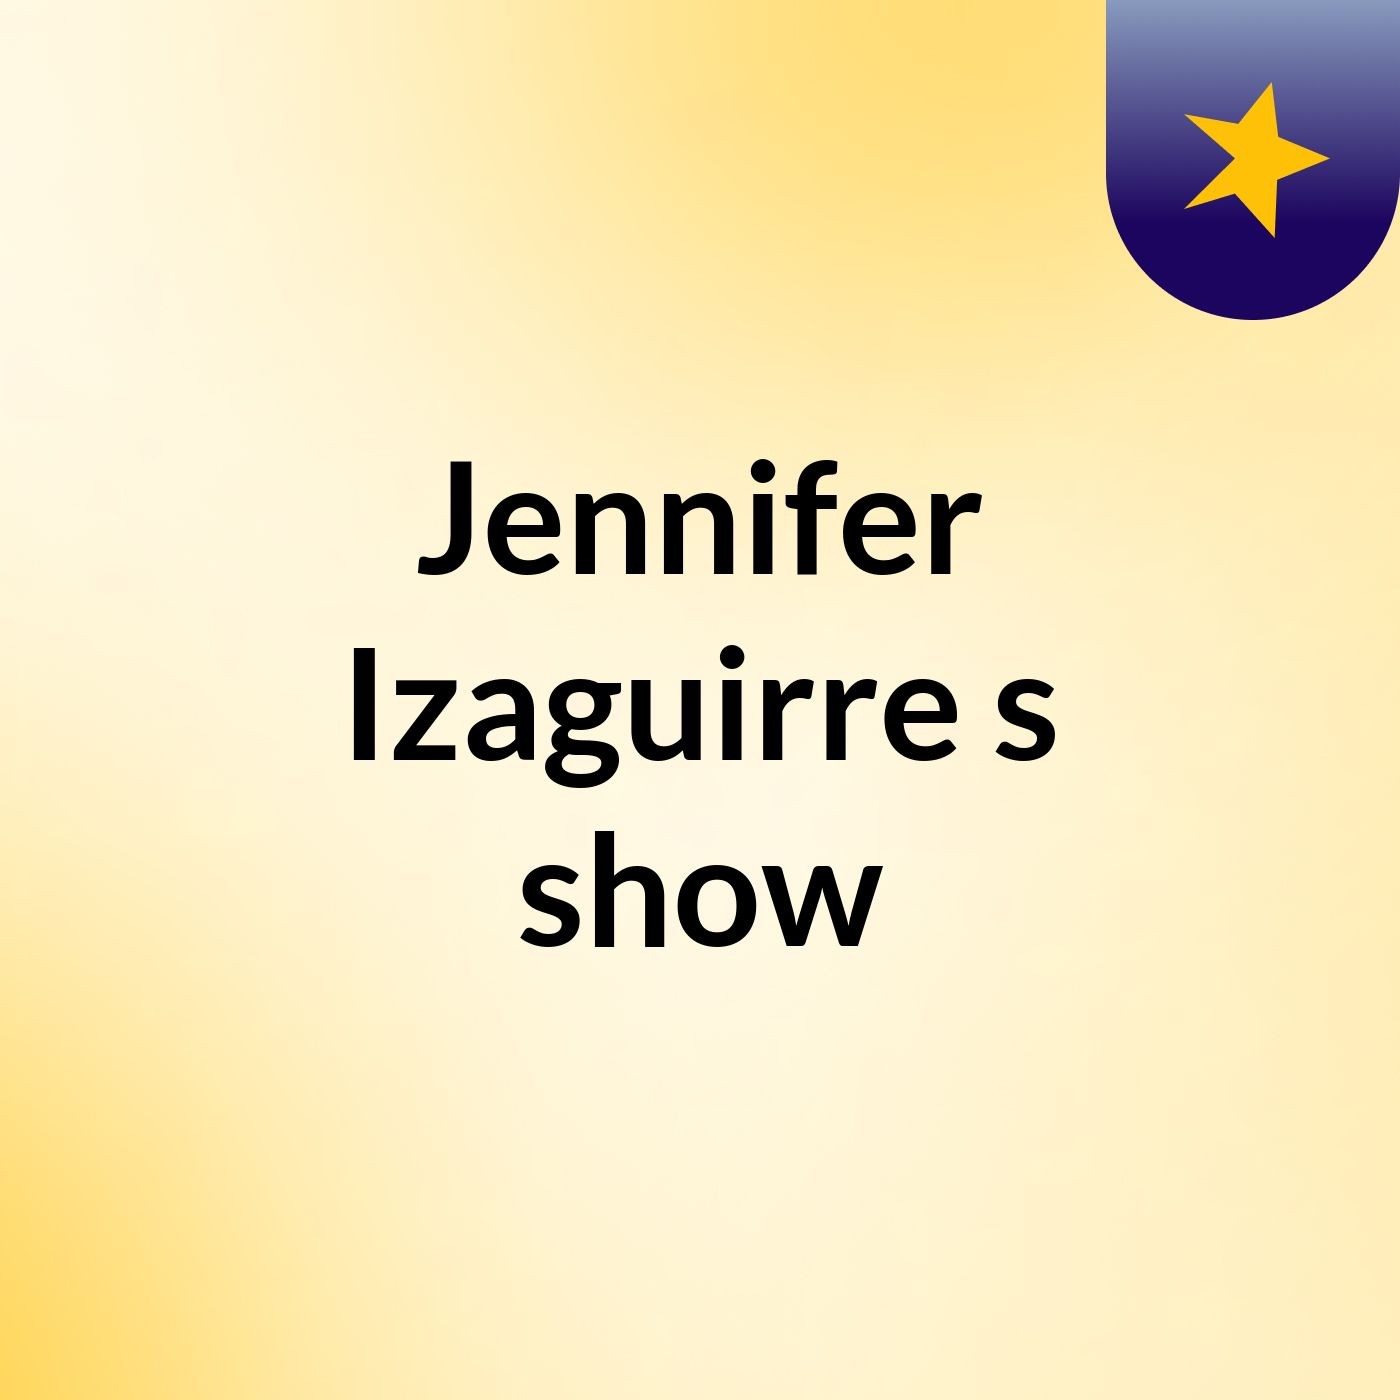 Jennifer Izaguirre's show